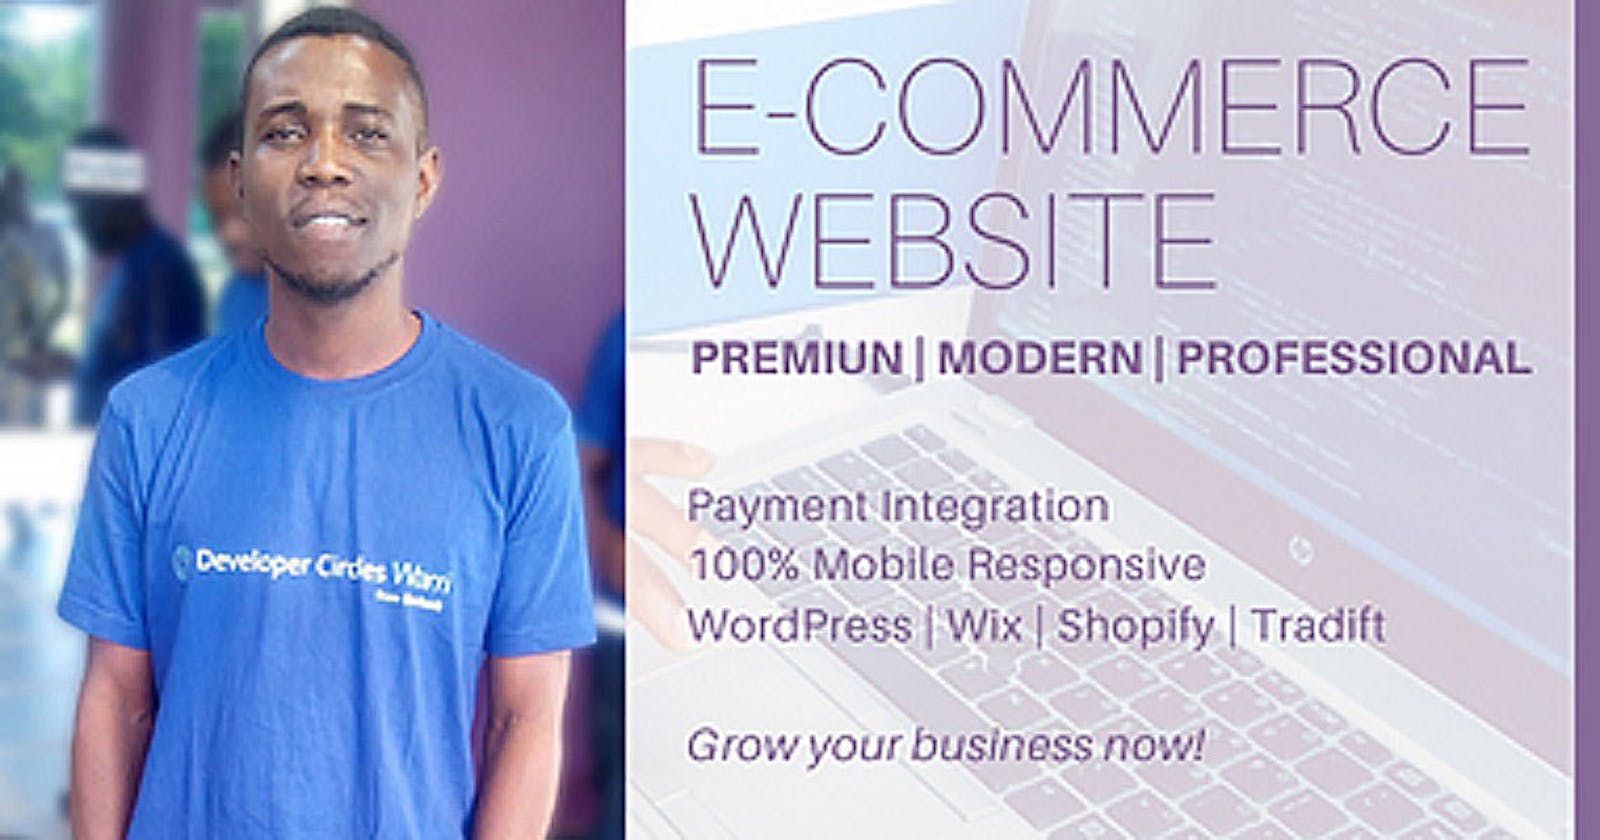 Build a Premium Modern Professional eCommerce website, the best Fiverr Gig